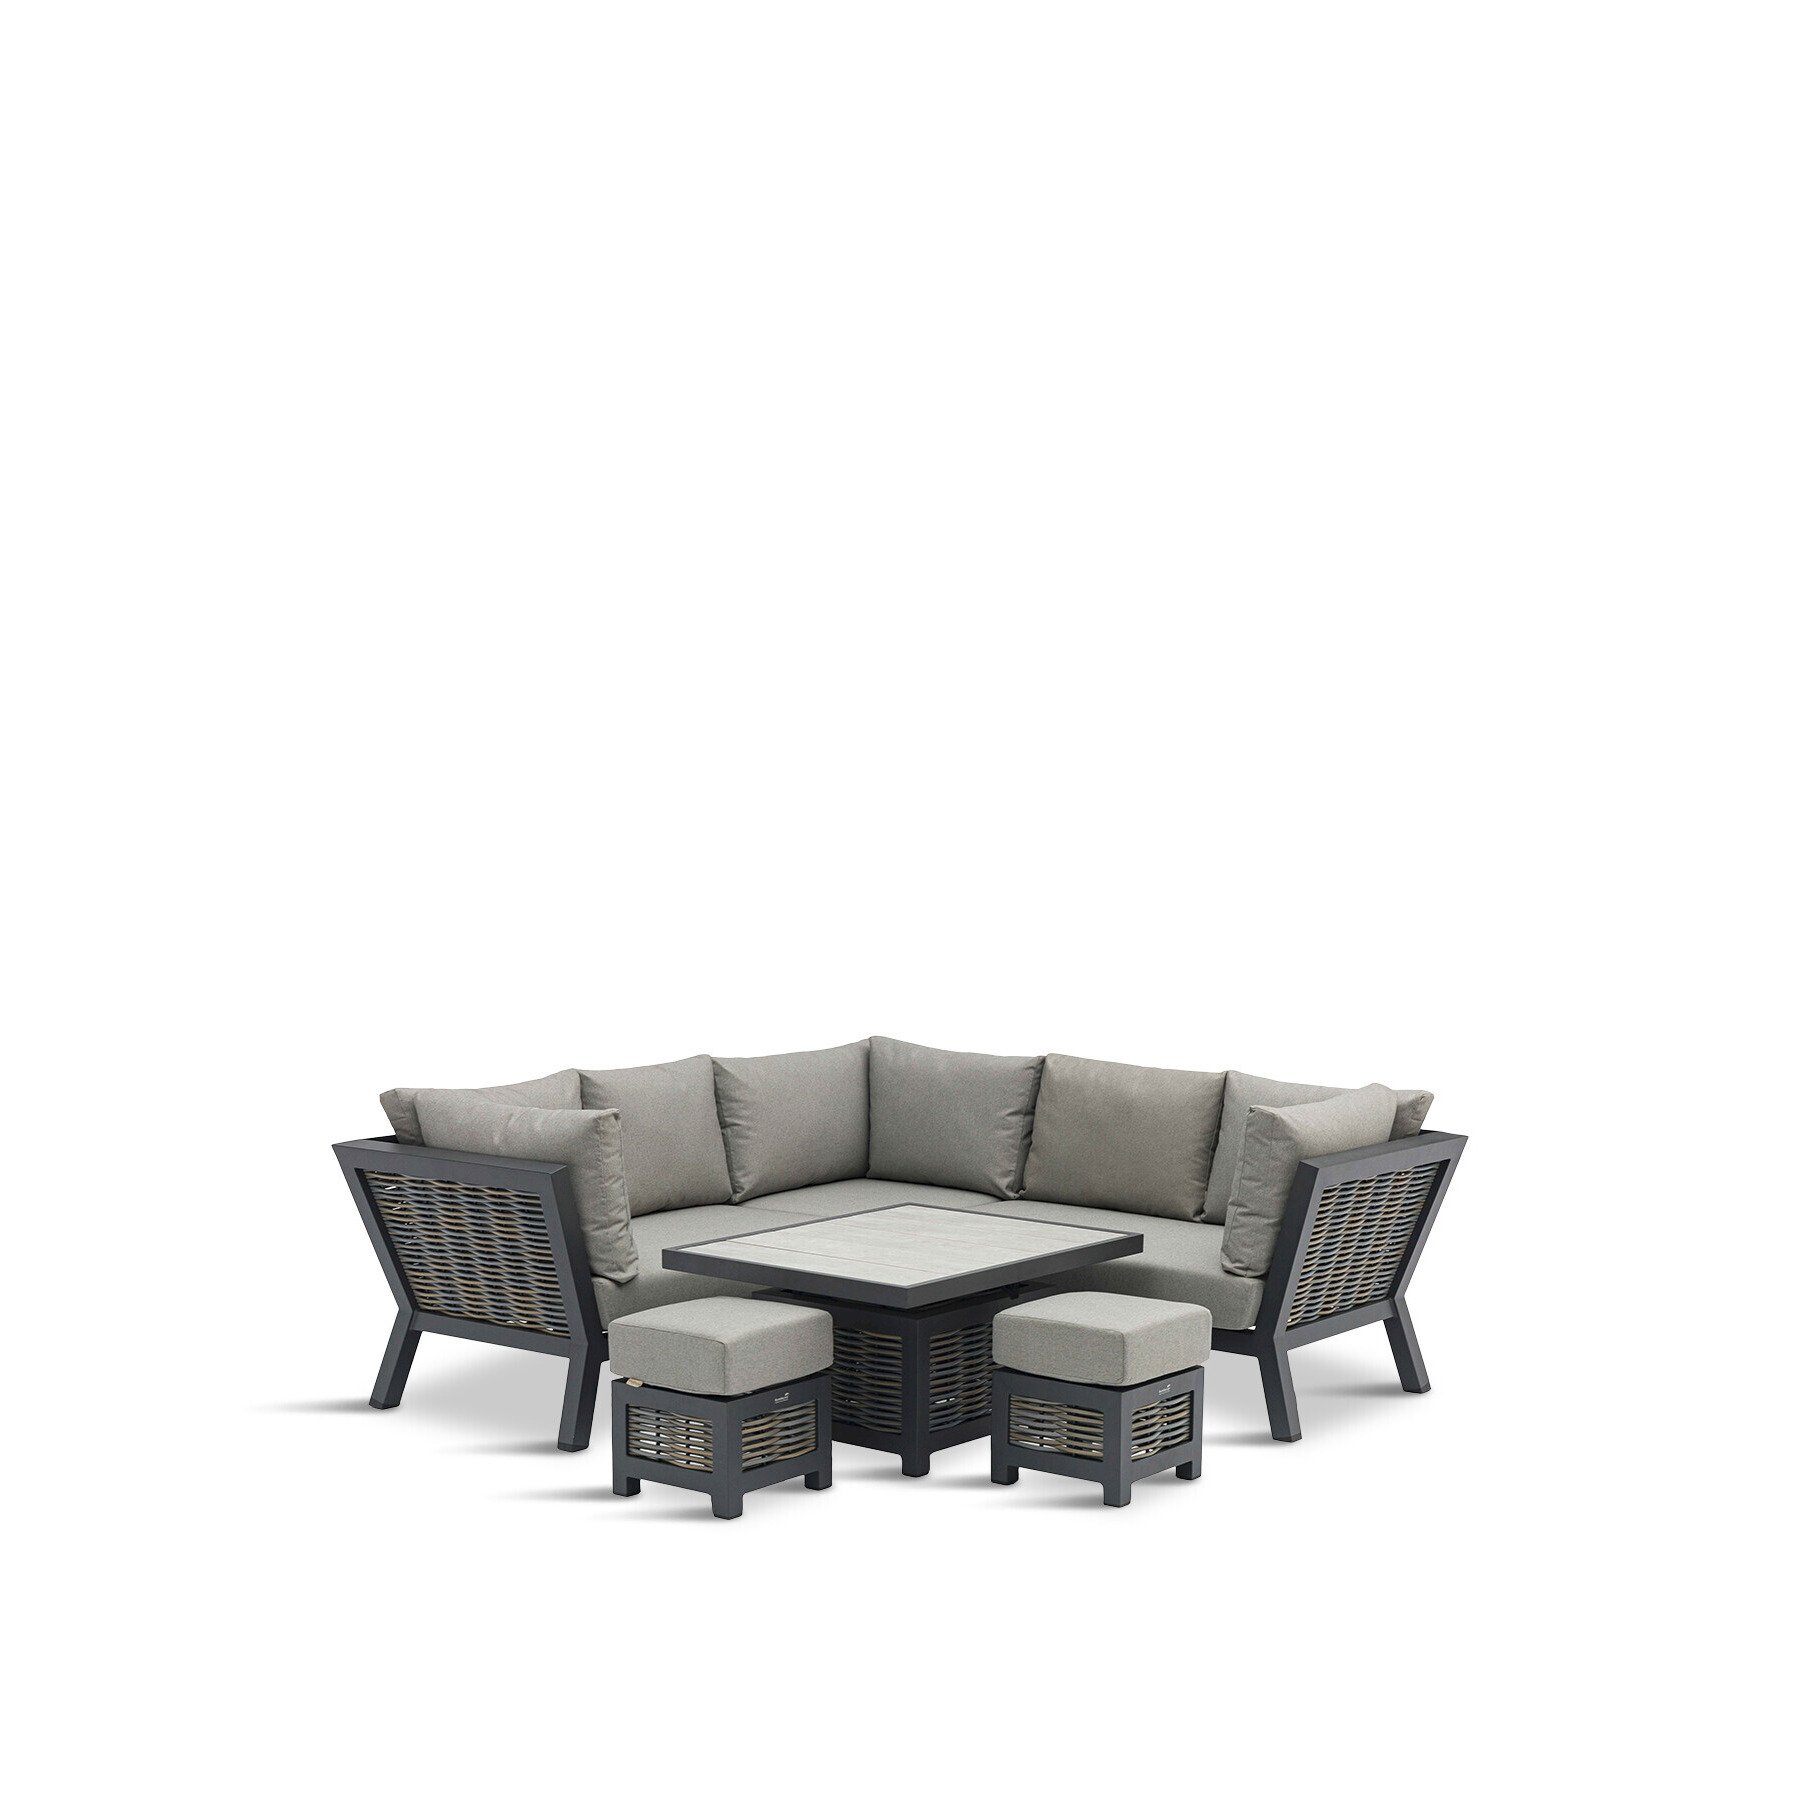 Bramblecrest Tuscan Dining Set with Mini Adjustable Height Table, Sofa Set & 2 Stools Grey - image 1